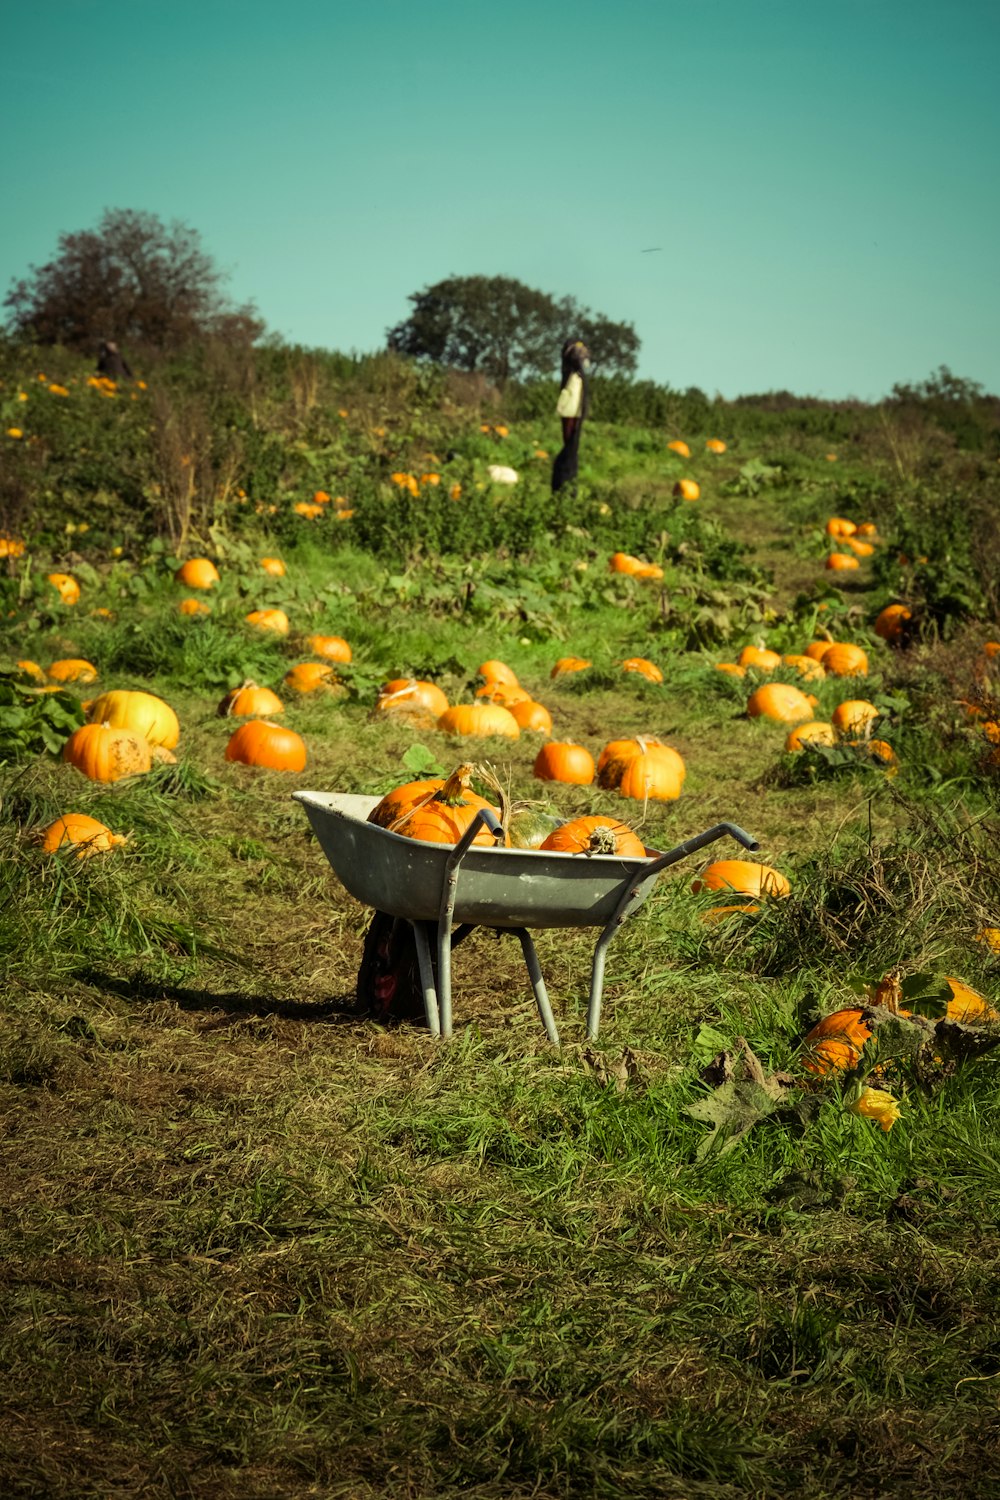 a wheelbarrow full of pumpkins in a field